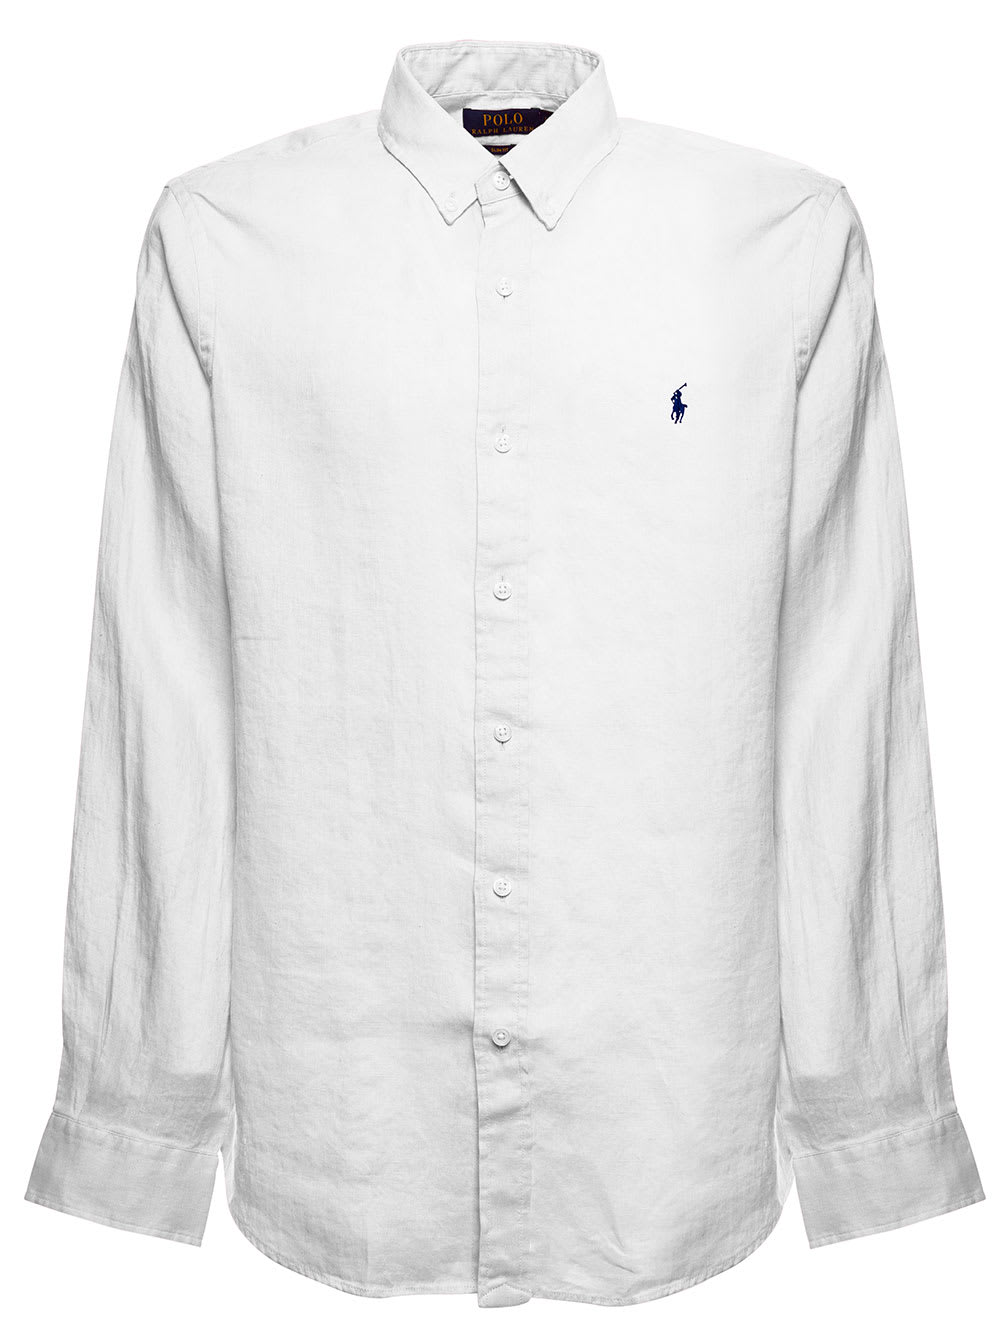 Man's White Linen Shirt With Logo